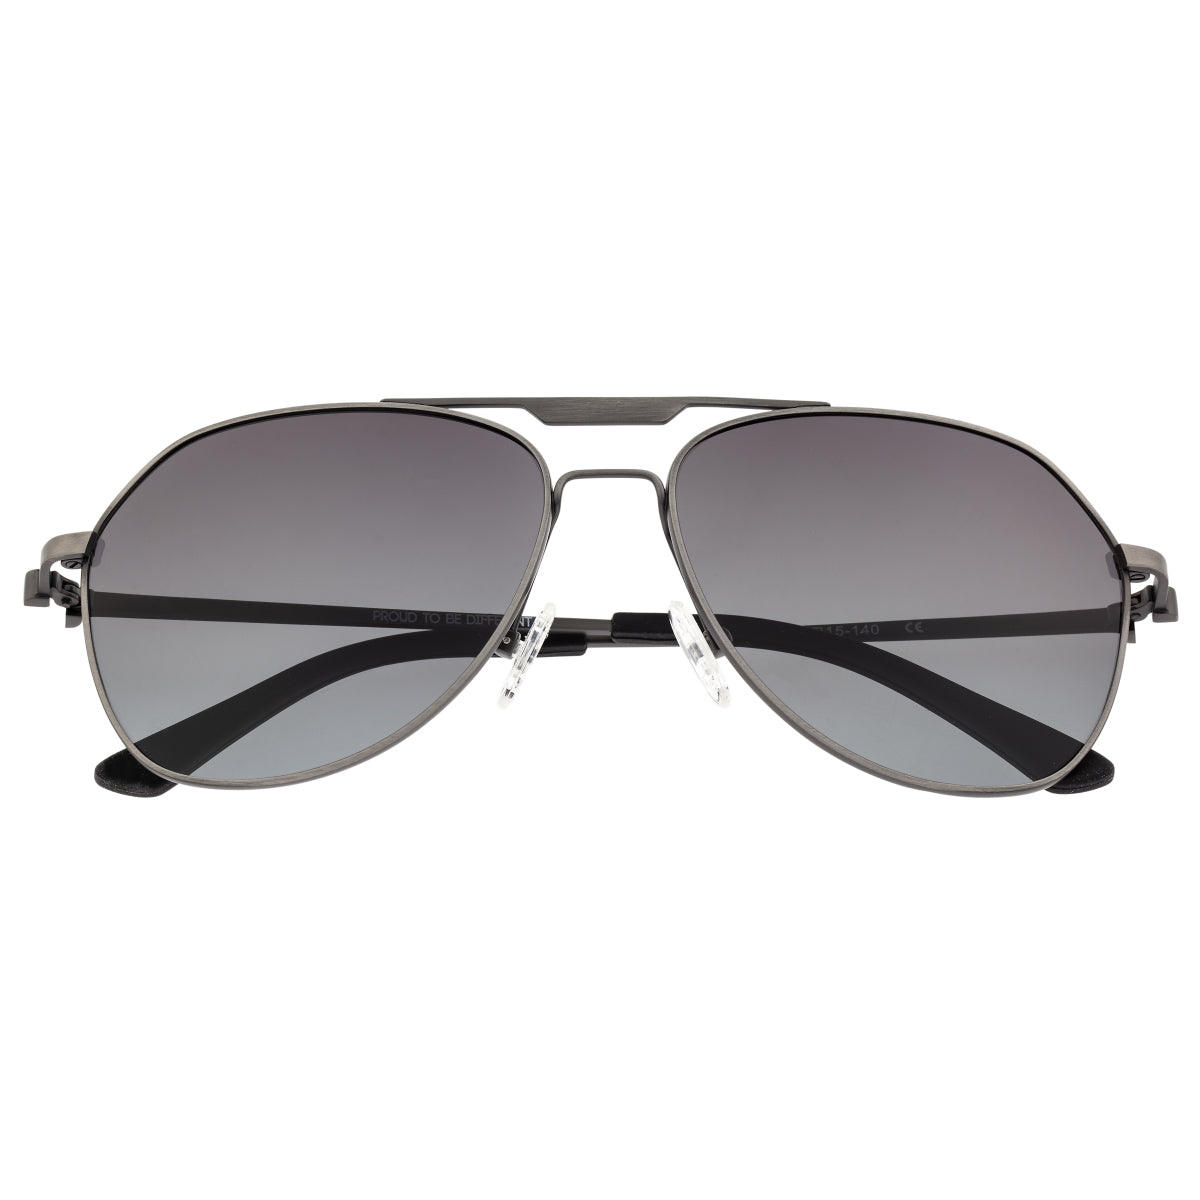 Breed Mount Titanium Polarized Sunglasses - Gunmetal/Black - BSG056GY